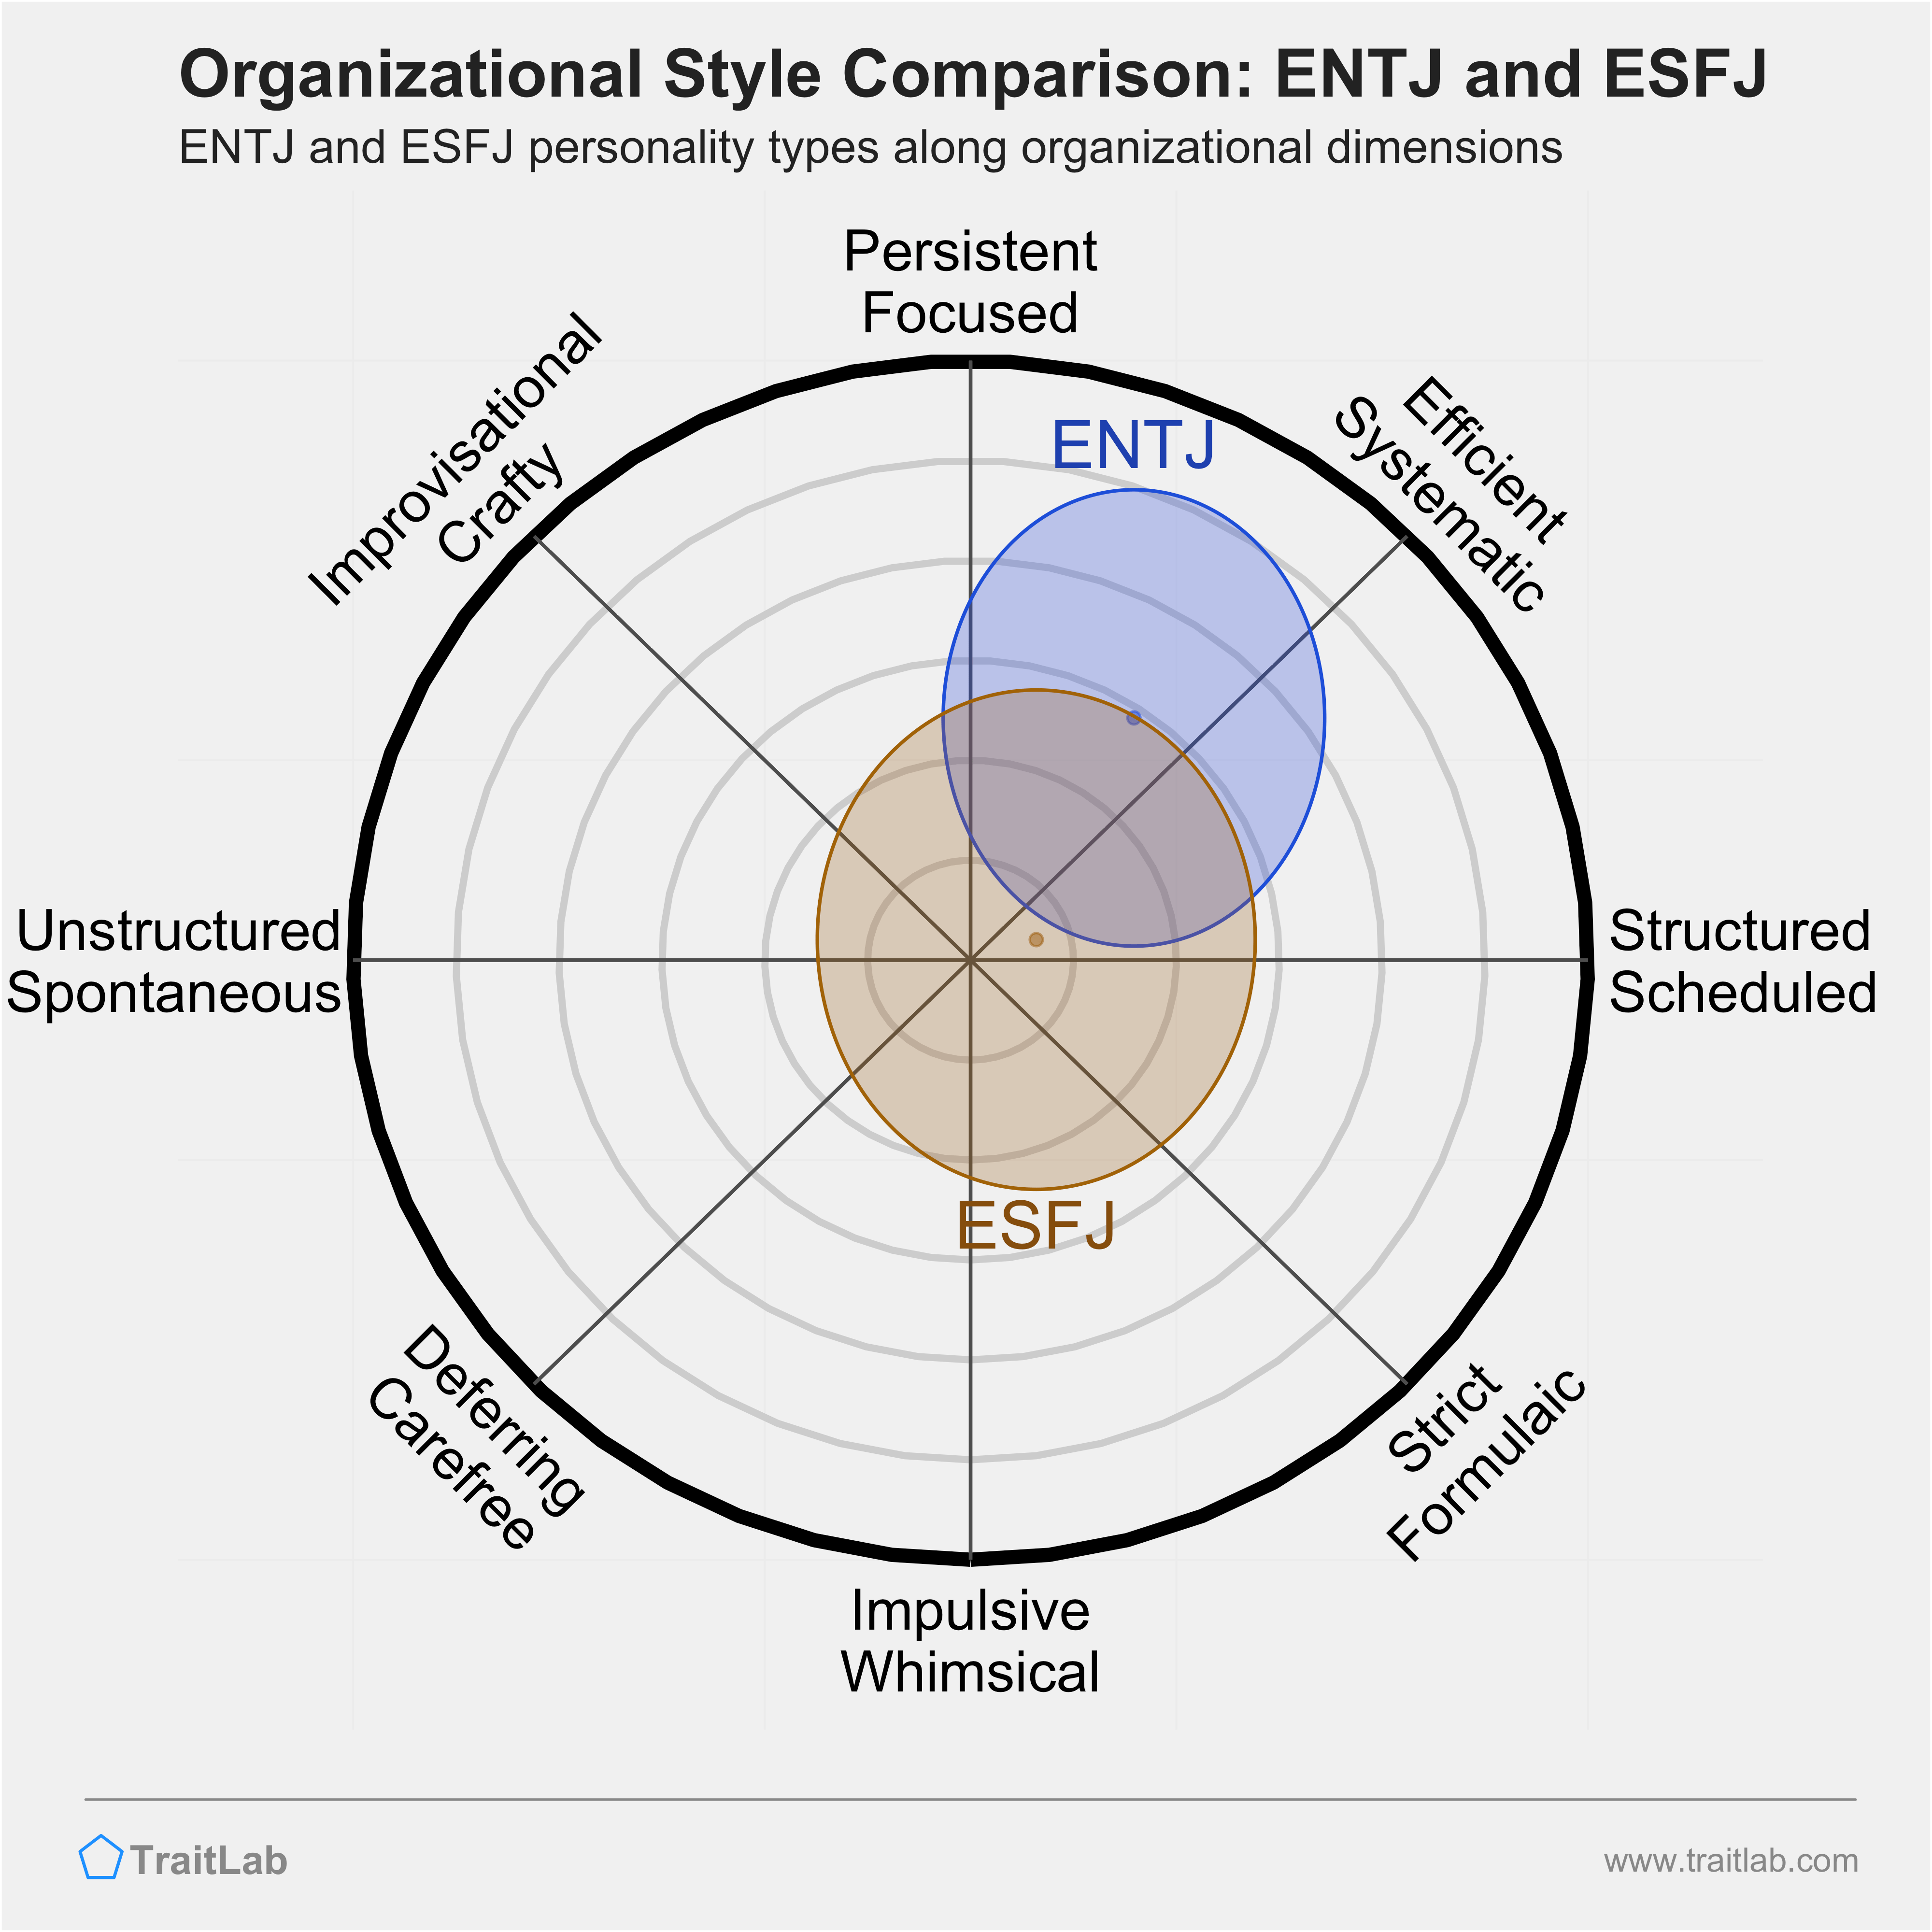 ENTJ and ESFJ comparison across organizational dimensions